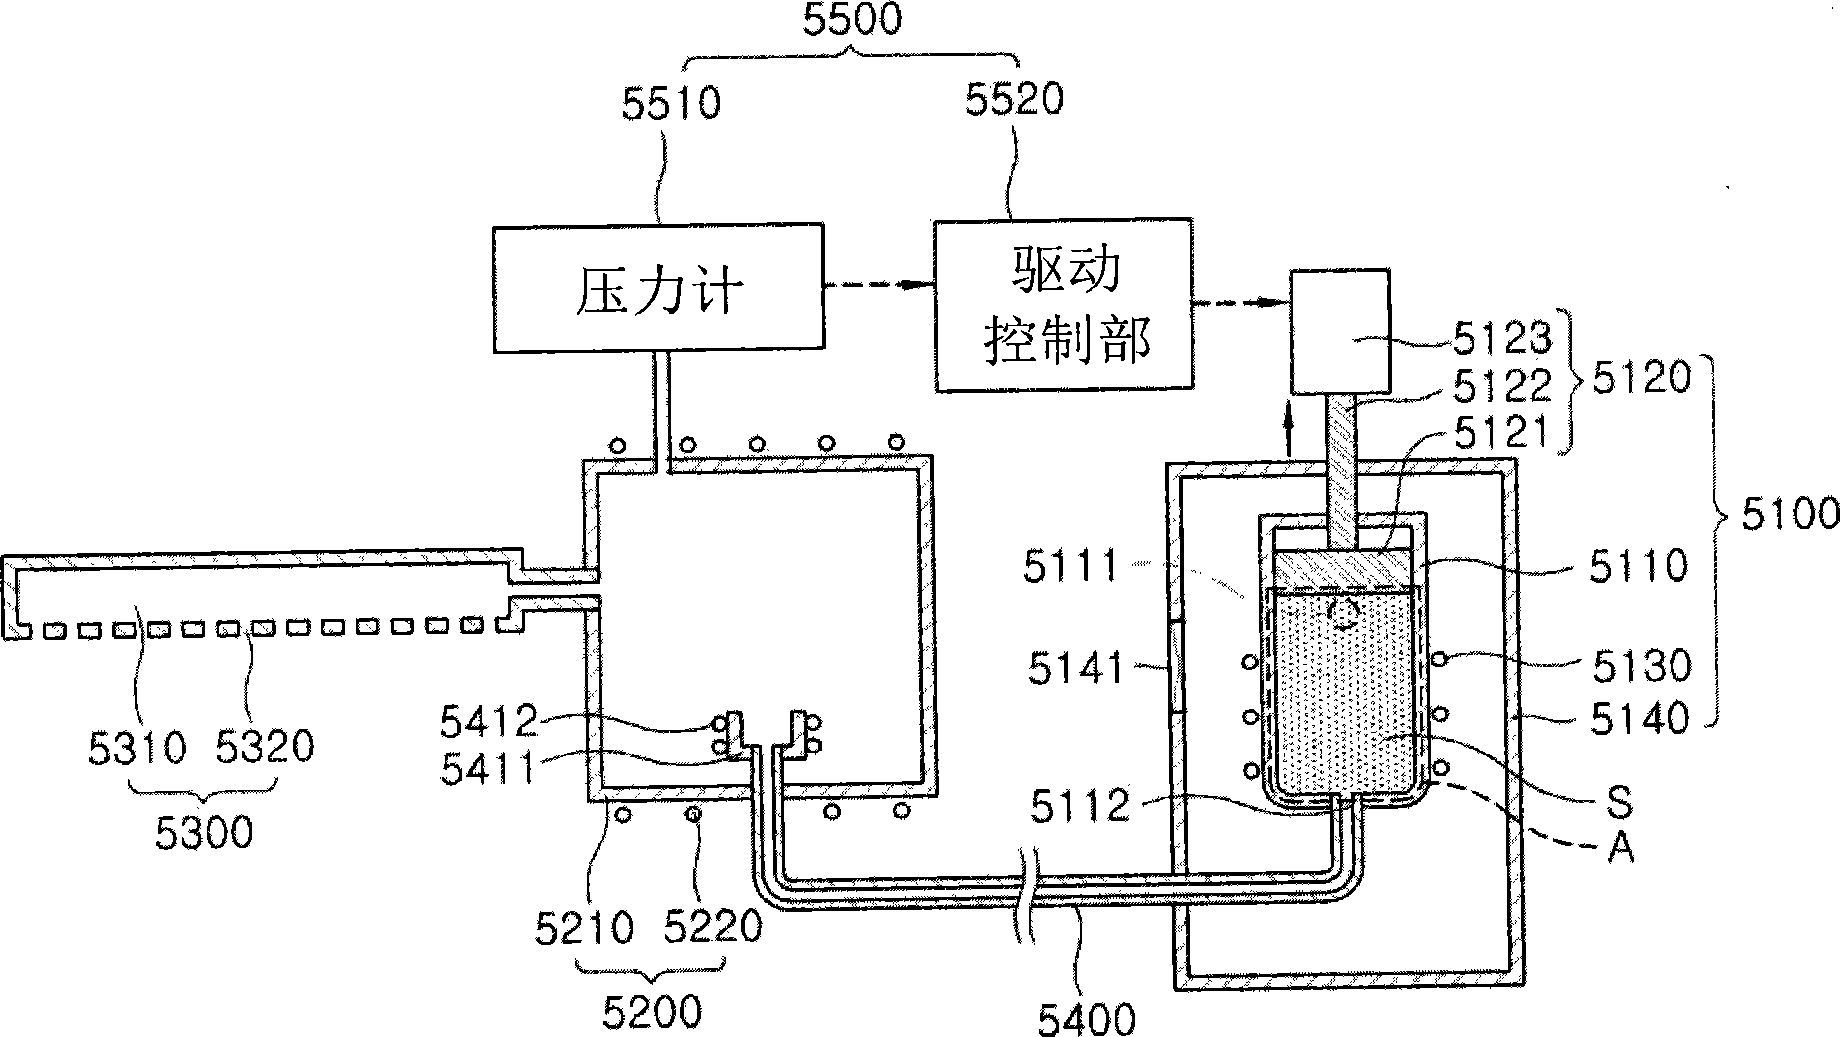 Source supplying unit, thin film depositing apparatus, and method for depositing thin film